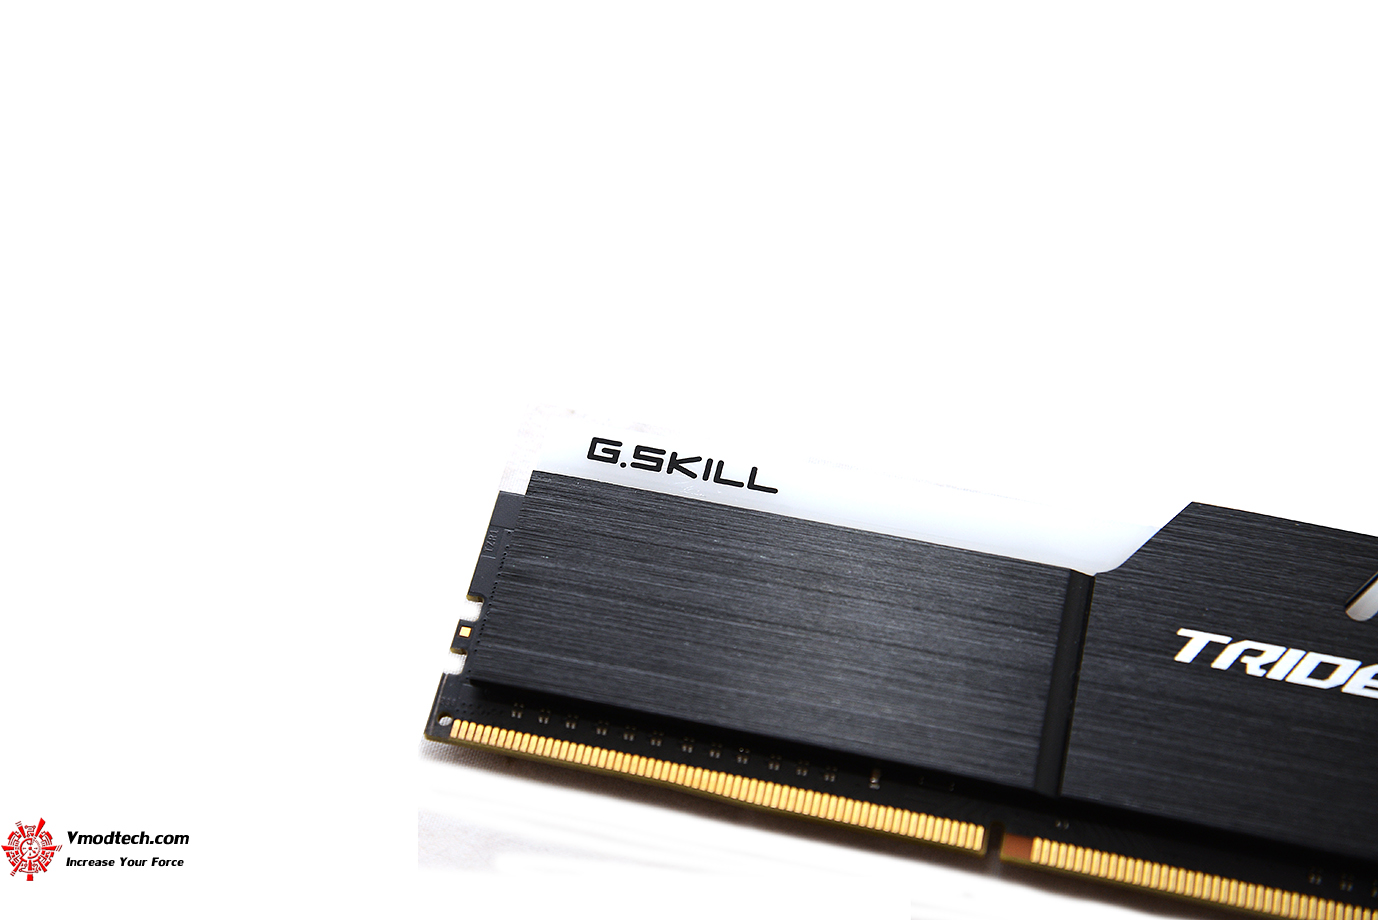 dsc 8089 G.SKILL Trident Z RGB DDR4 3200 (8X2) 16GB REVIEW